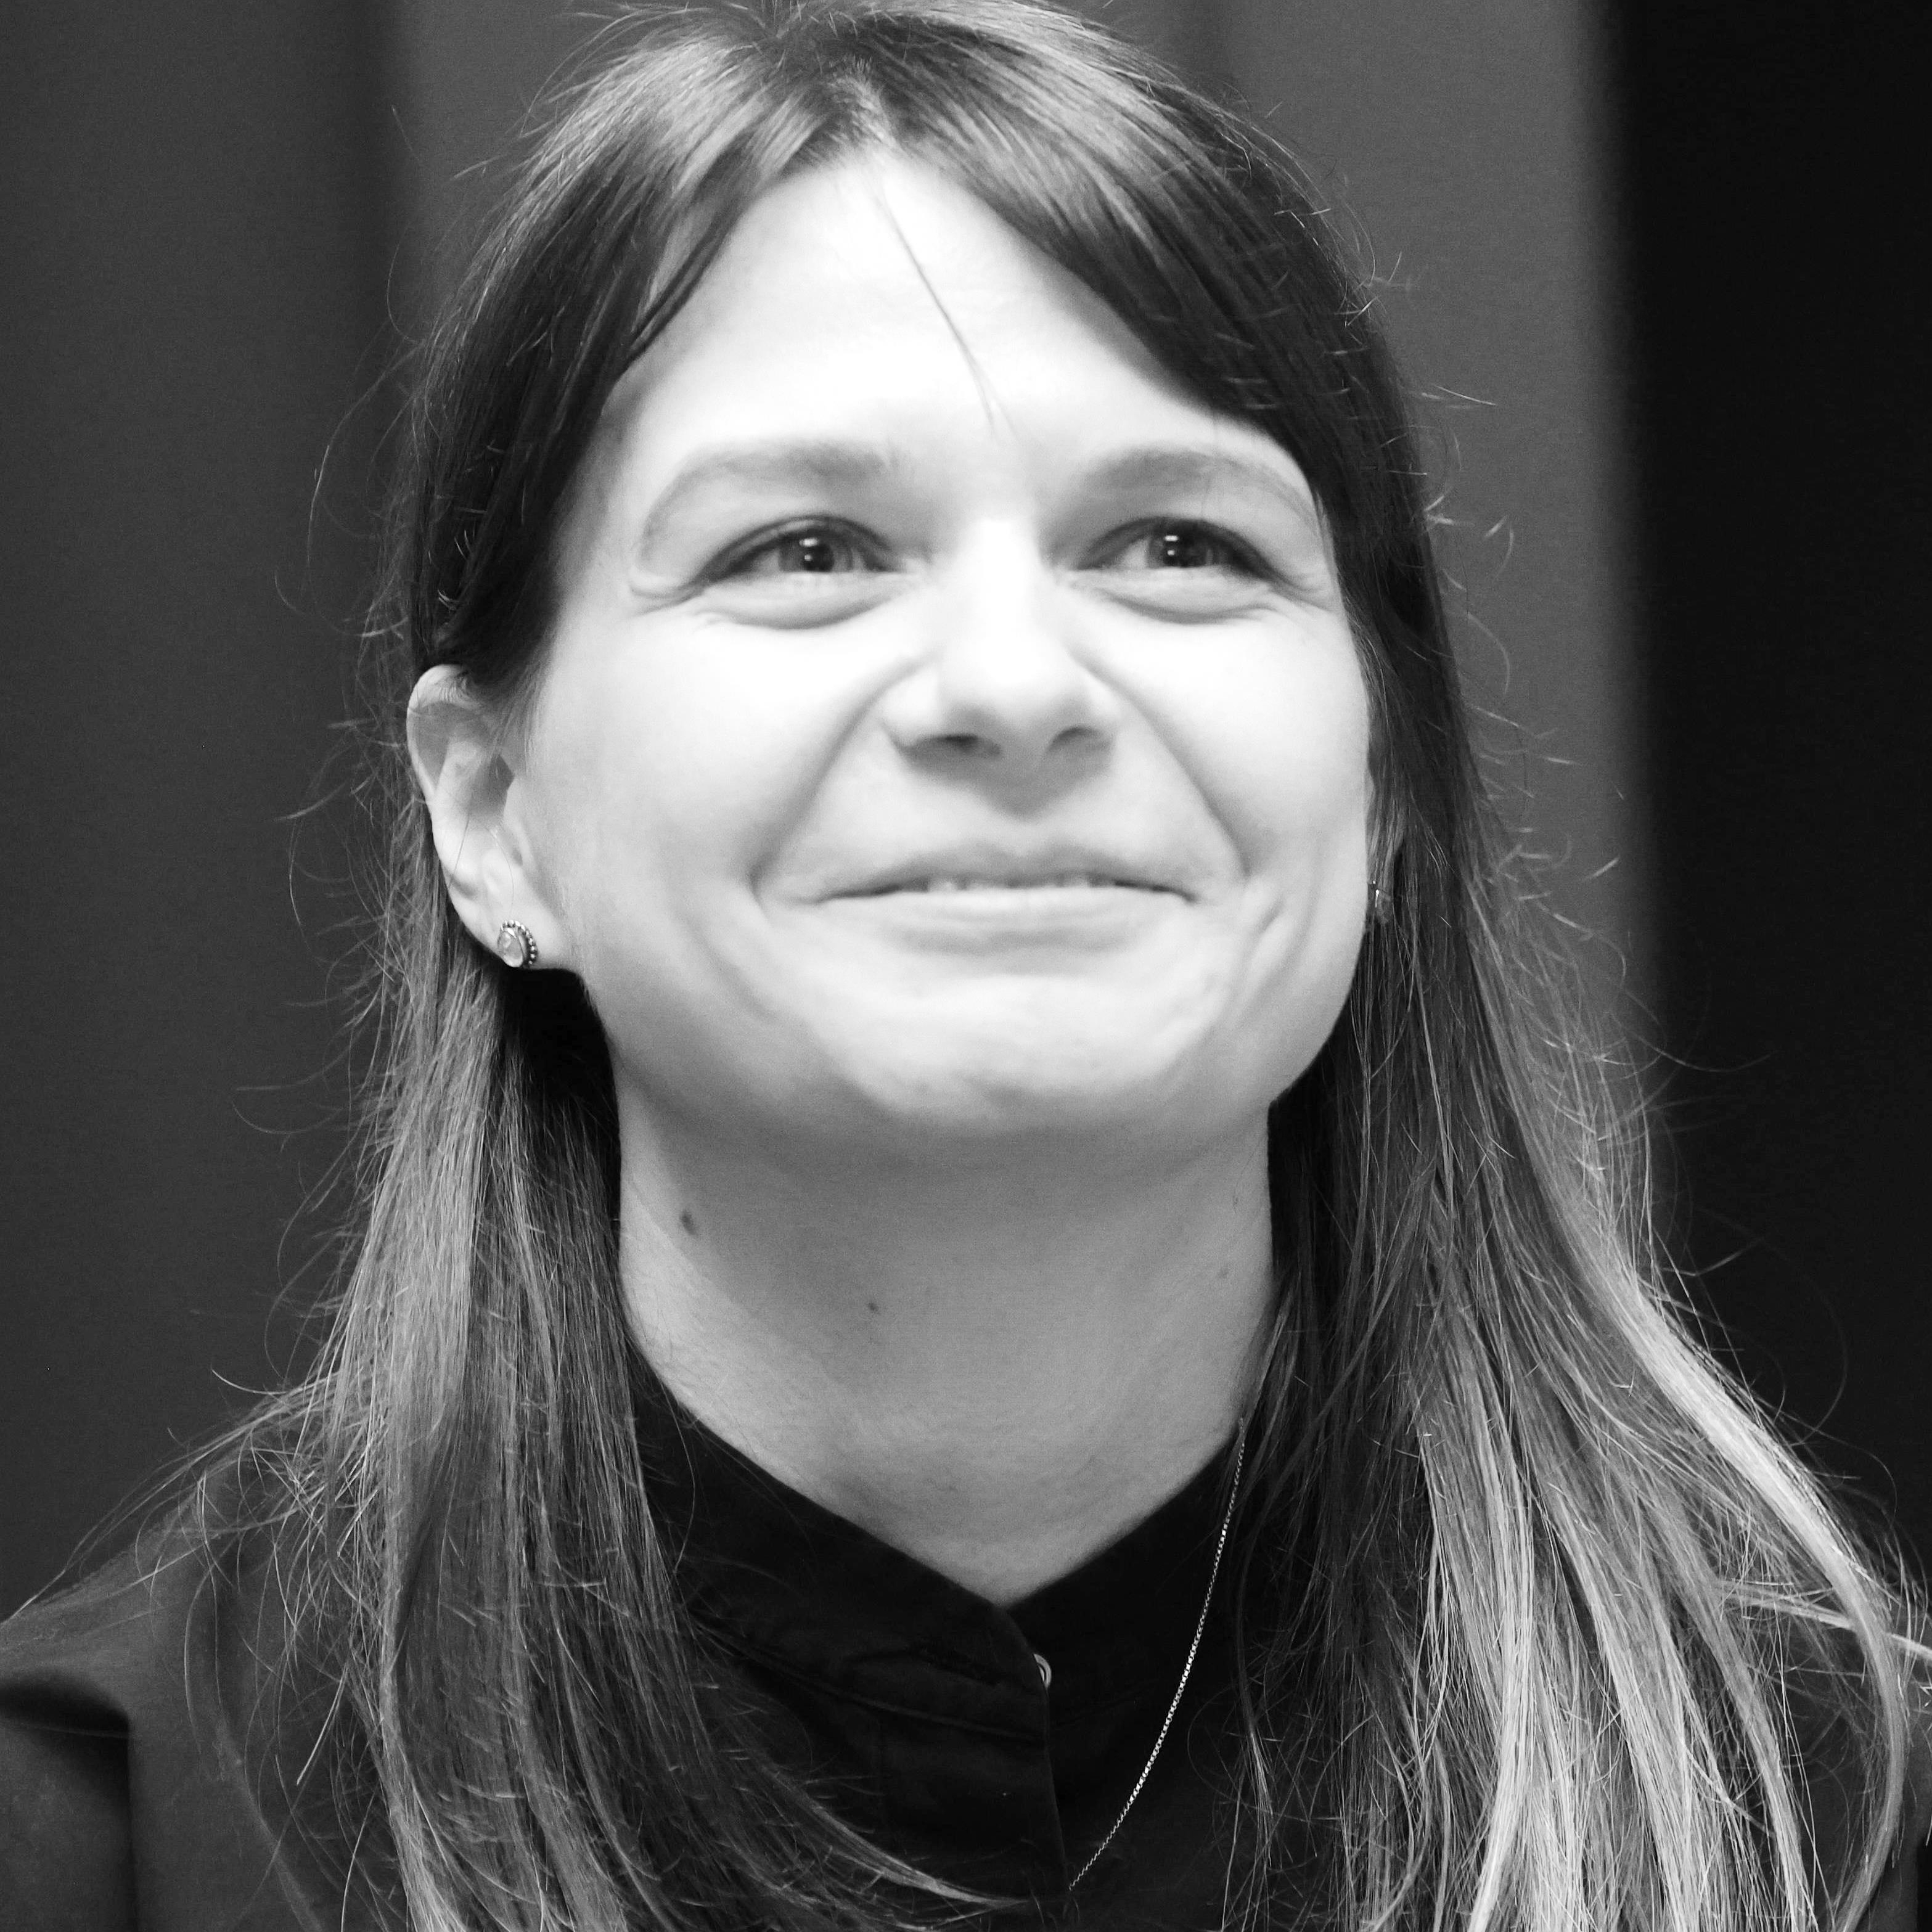 Hanna Doroszuk